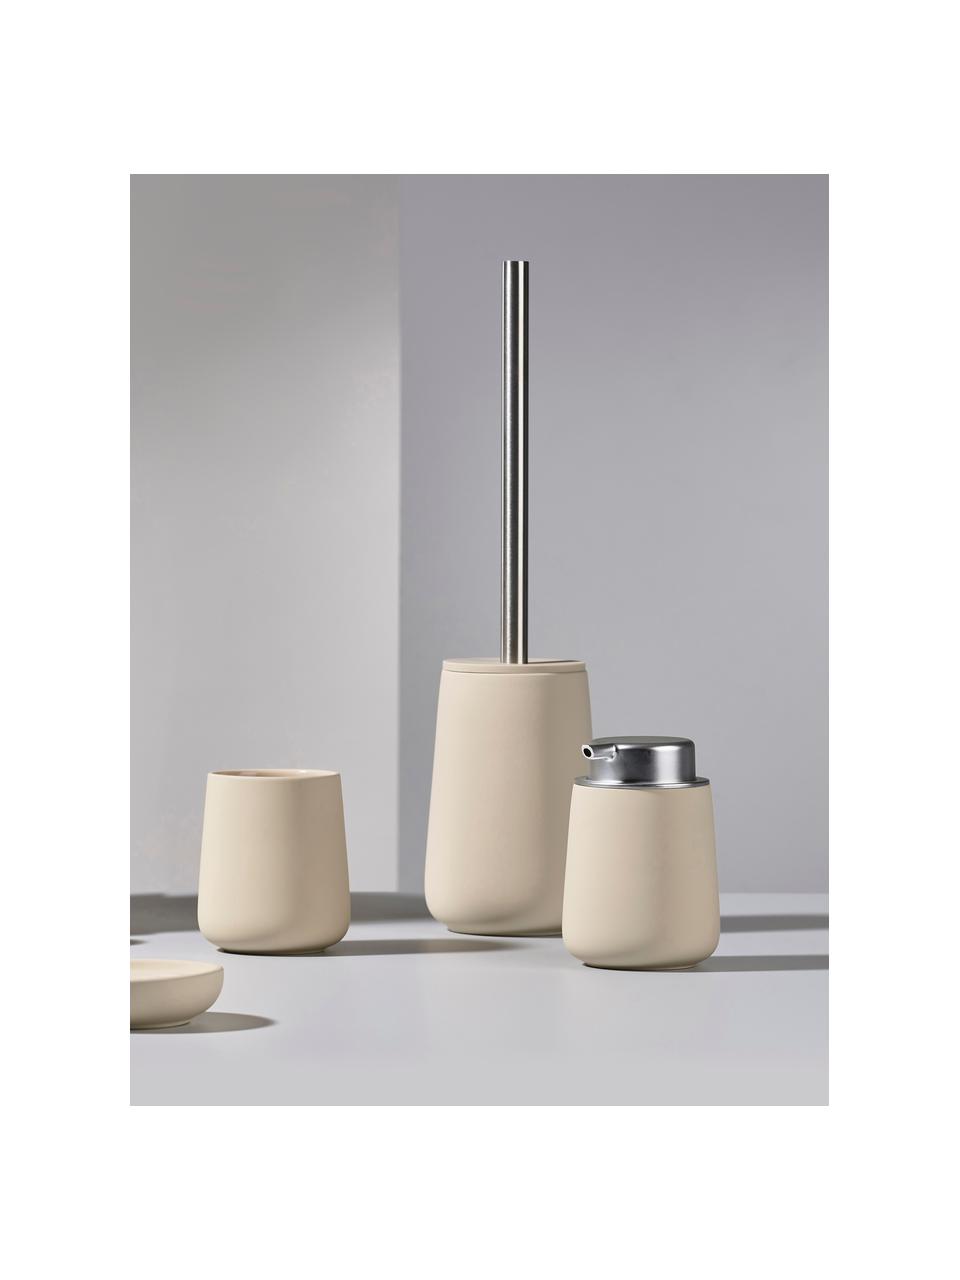 Dosificador de jabón de porcelana Nova One, Recipiente: porcelana, Dosificador: plástico, Beige, Ø 8 x Al 12 cm